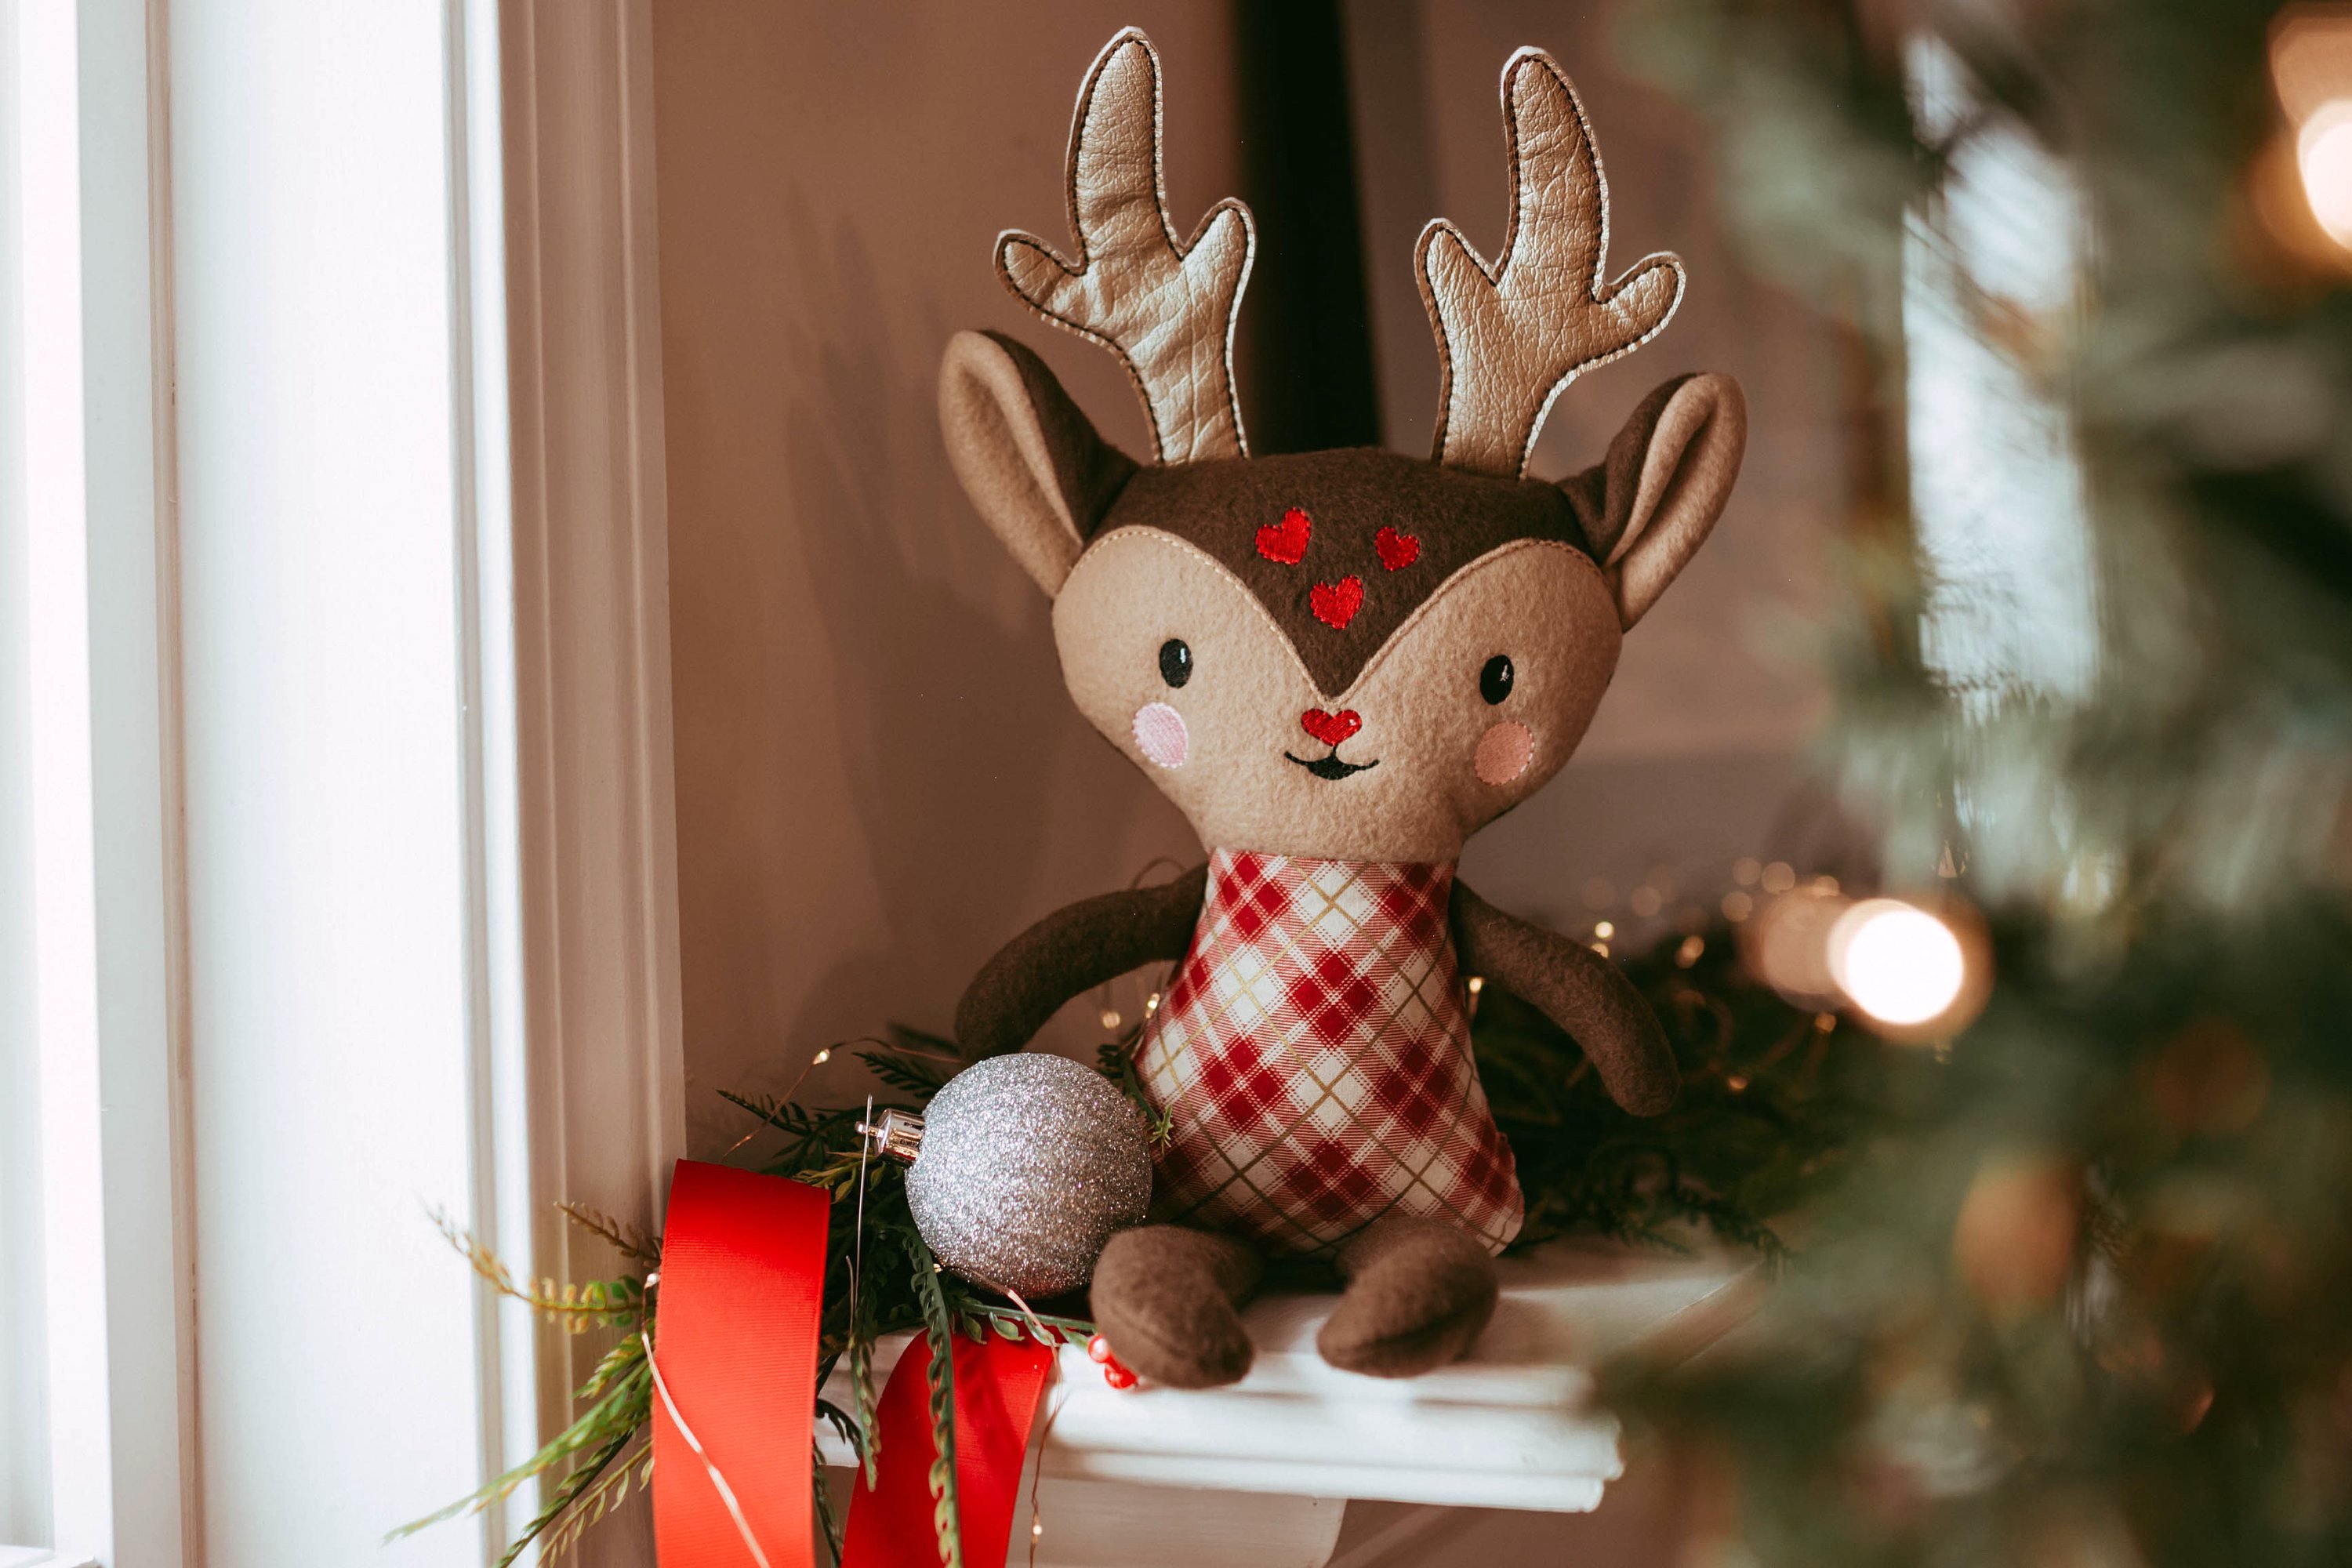 Handmade toys for kids: Personalized reindeer stuffy from Plucky Rabott